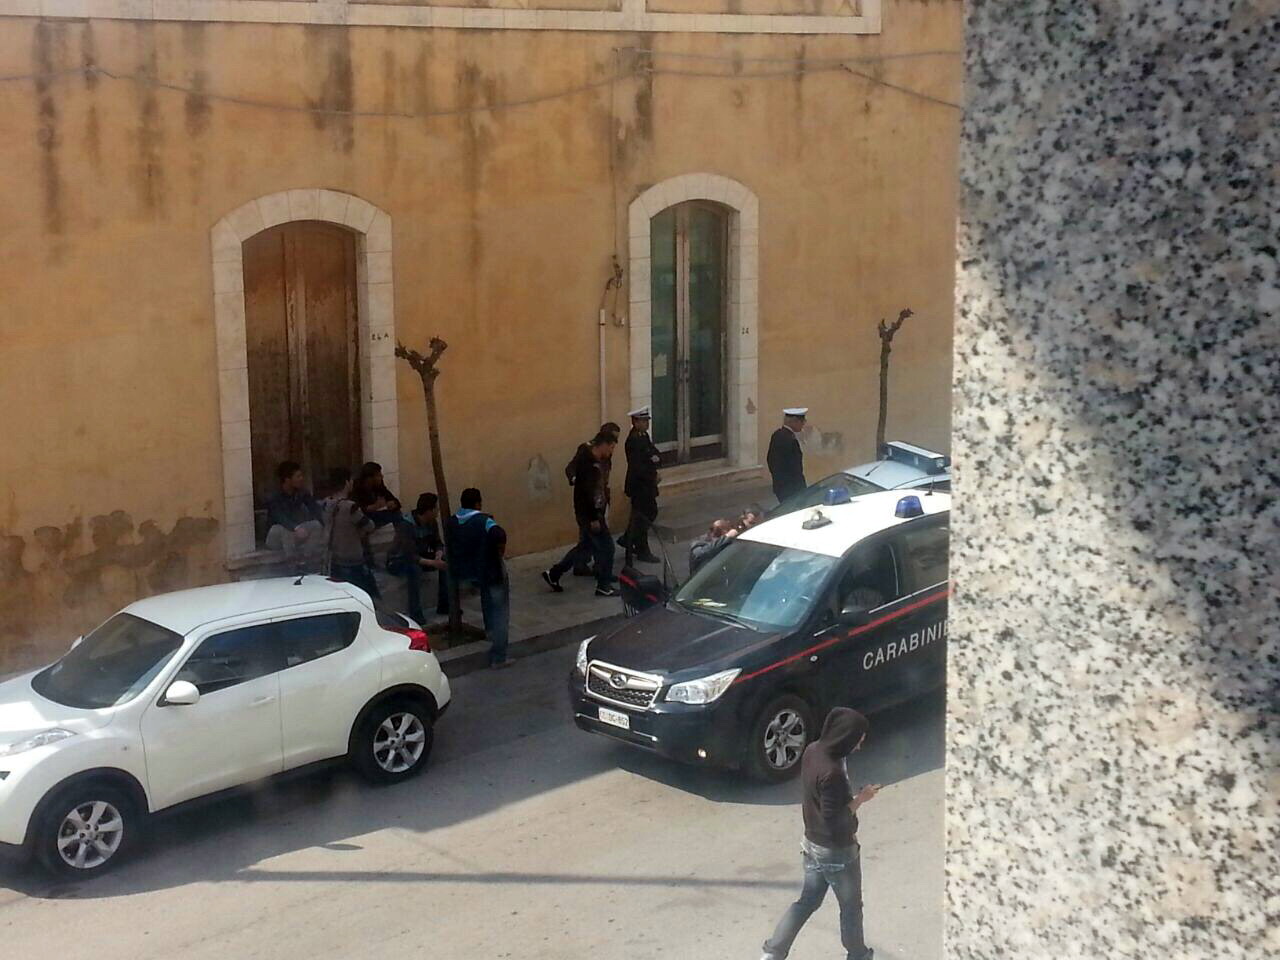  Sicurezza, 150 controlli a Santa Croce: emessi 4 decreti di espulsione